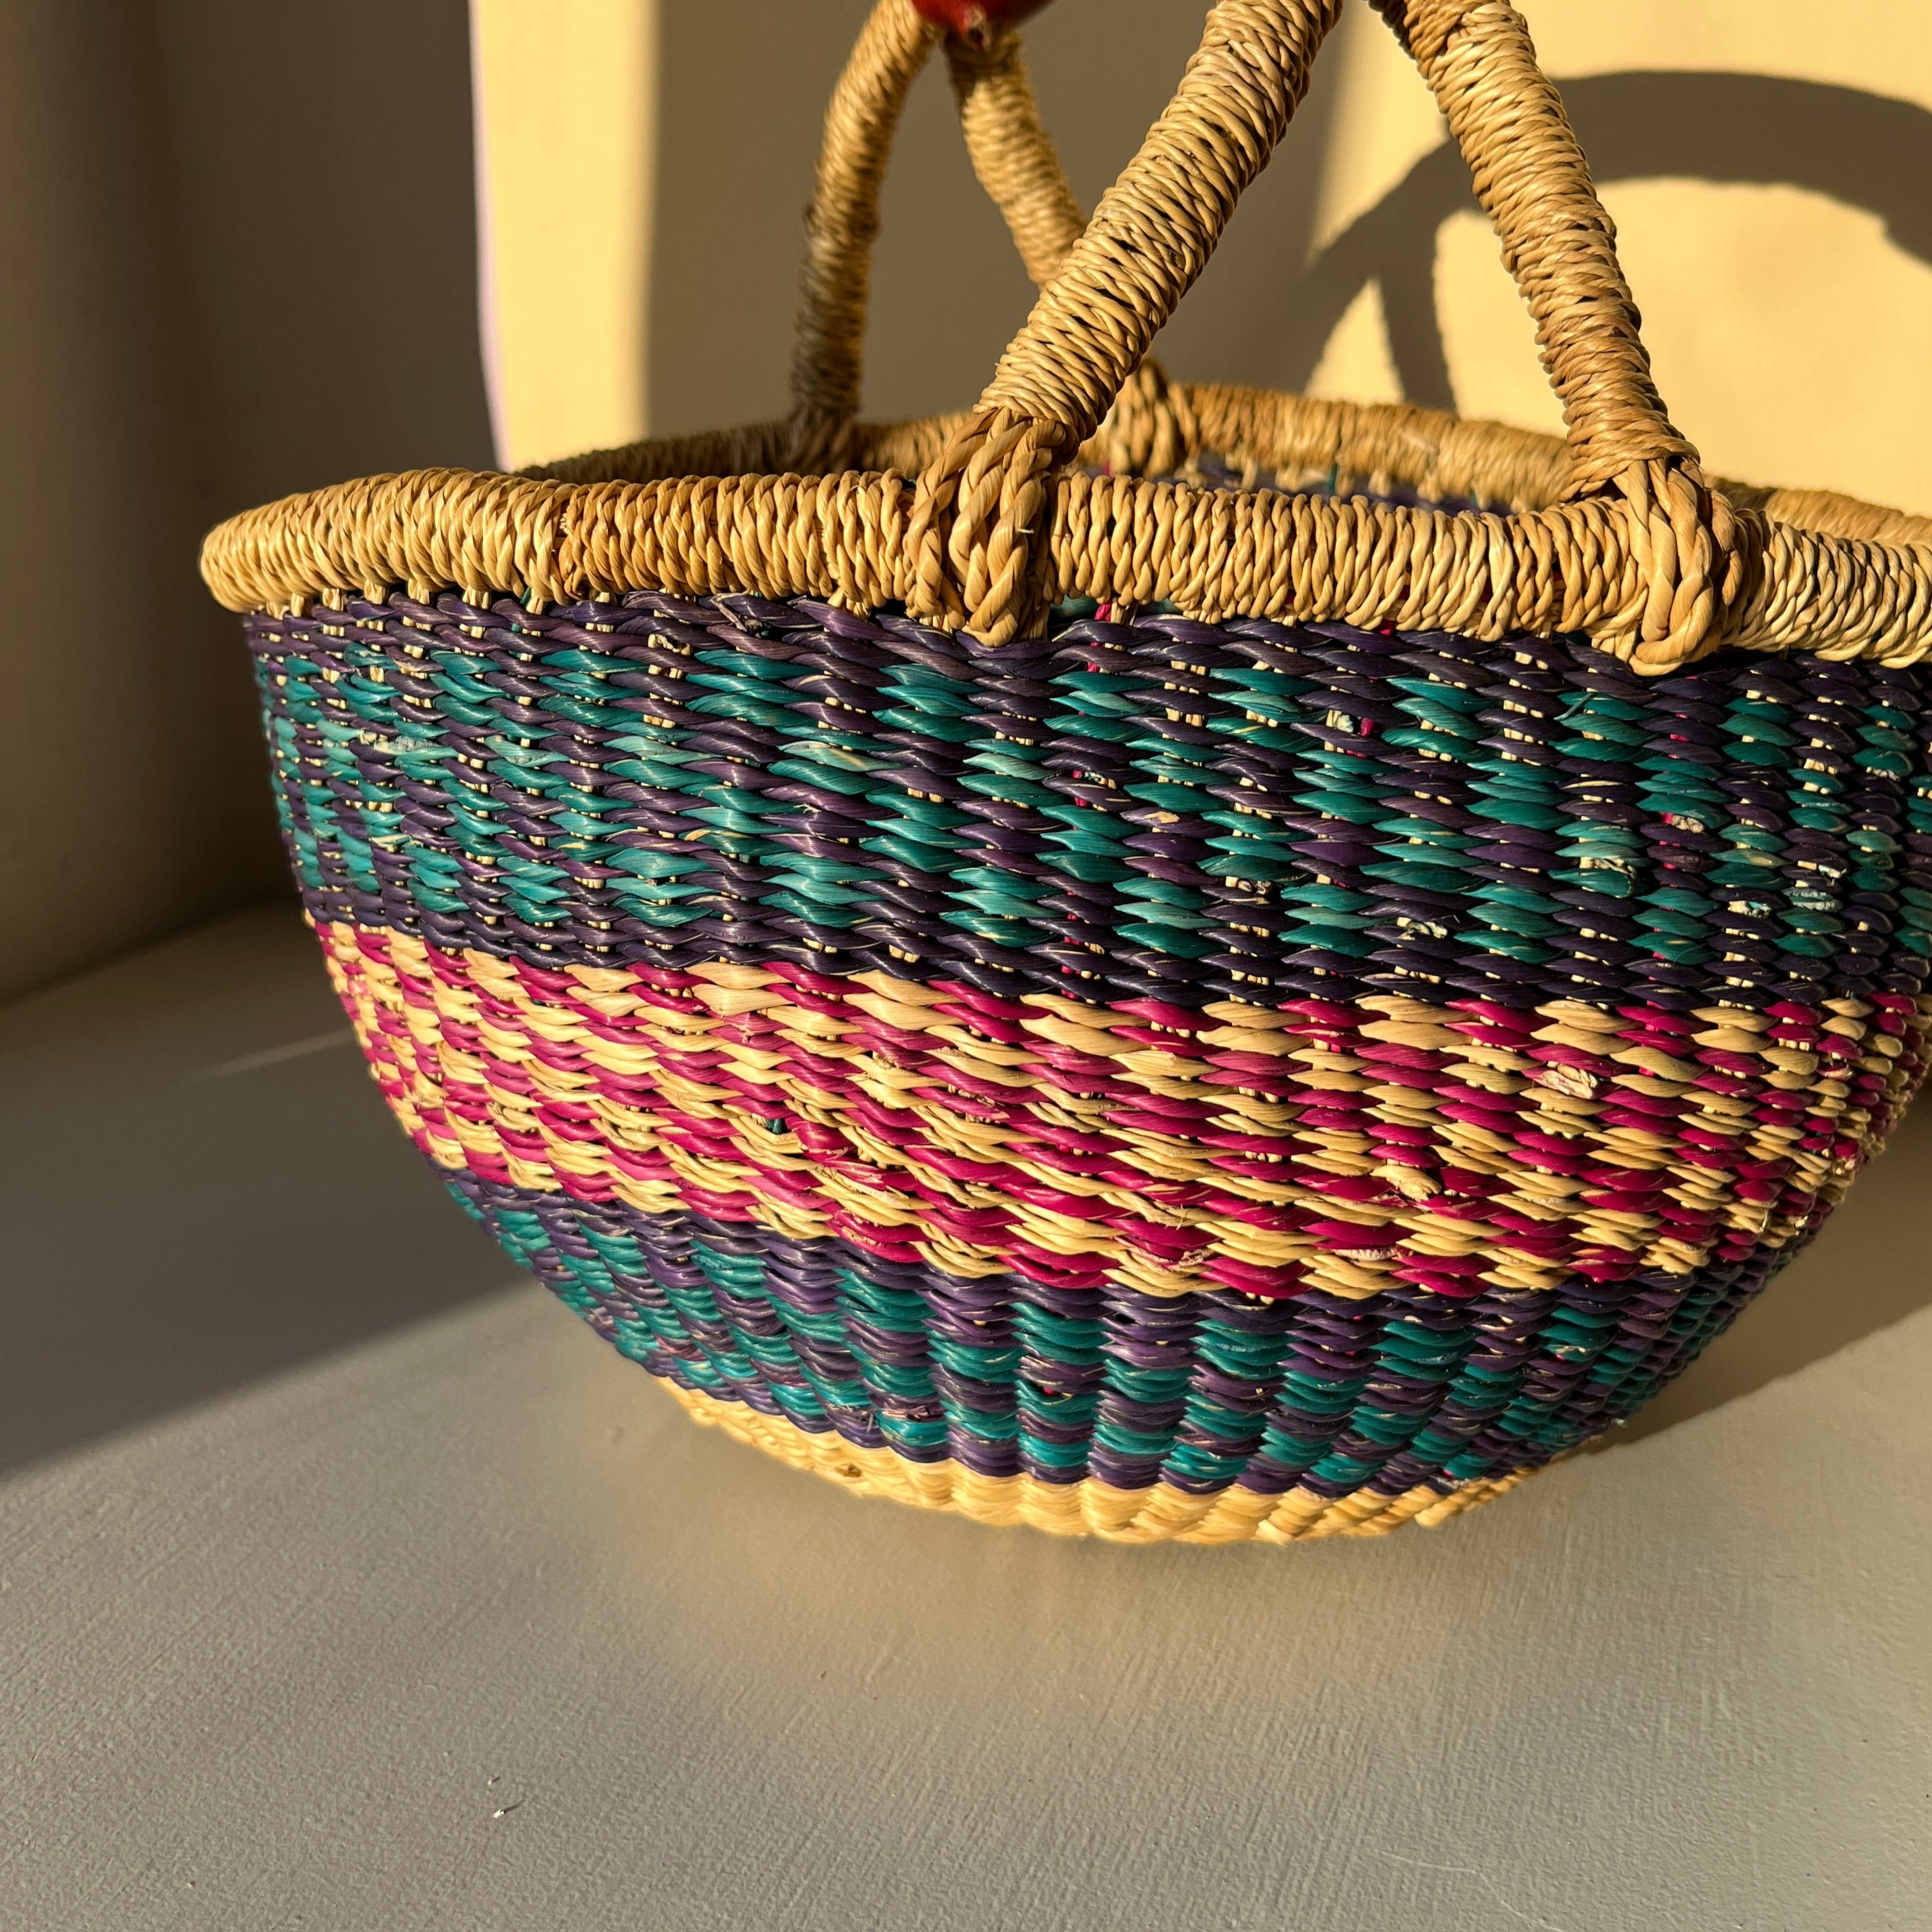 Seagrass basket small No. 4